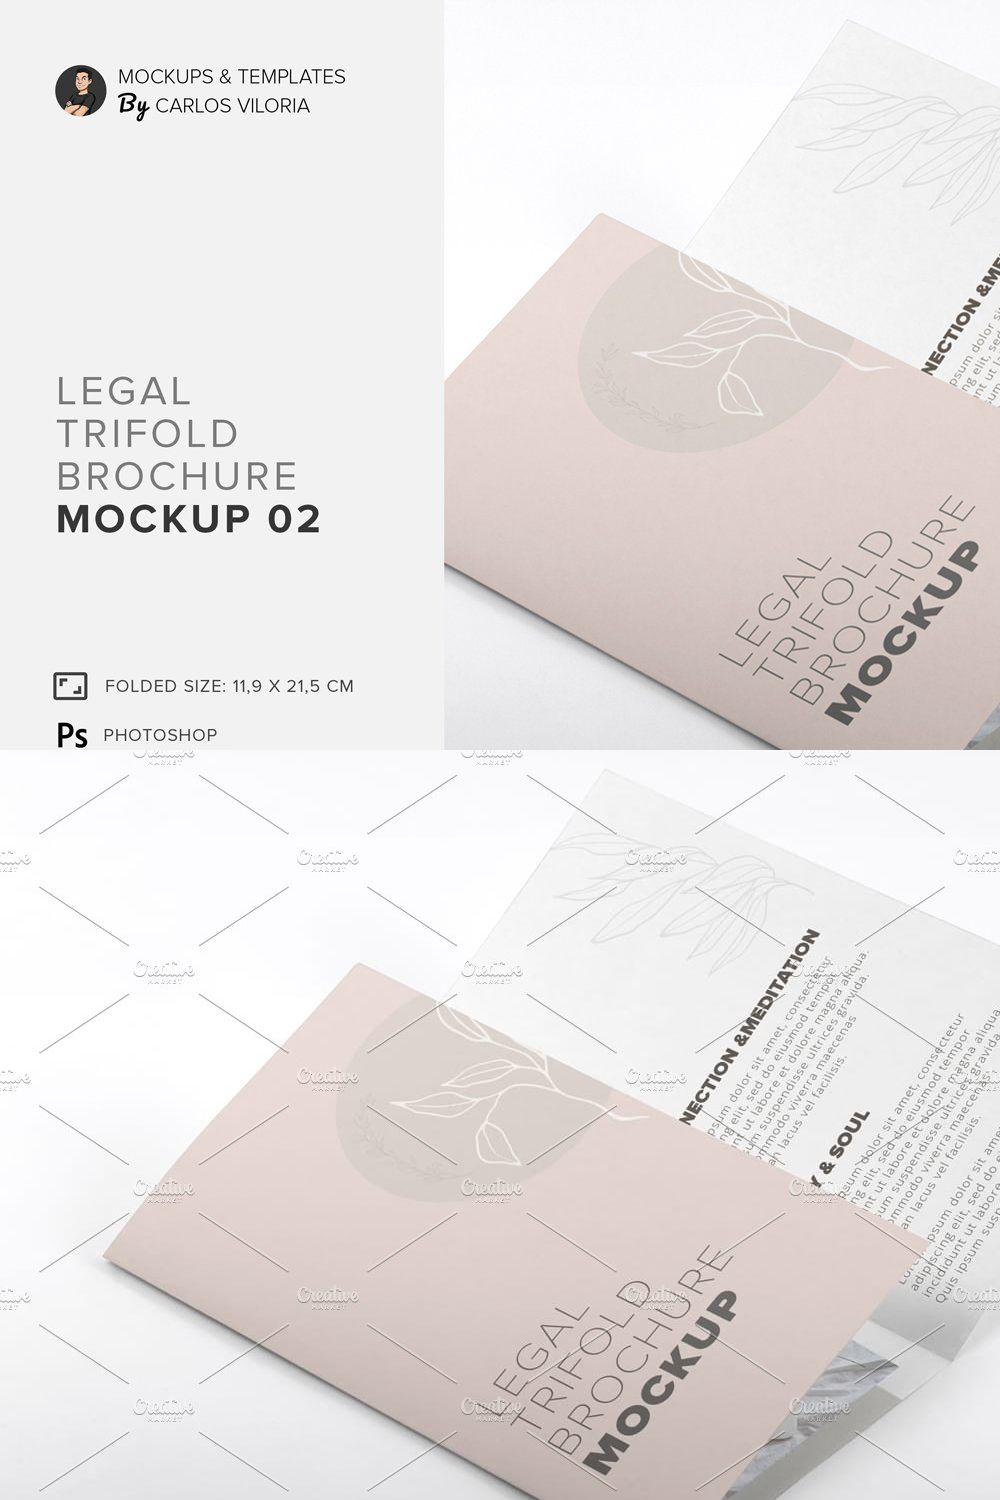 Legal Trifold Brochure Mockup 02 pinterest preview image.